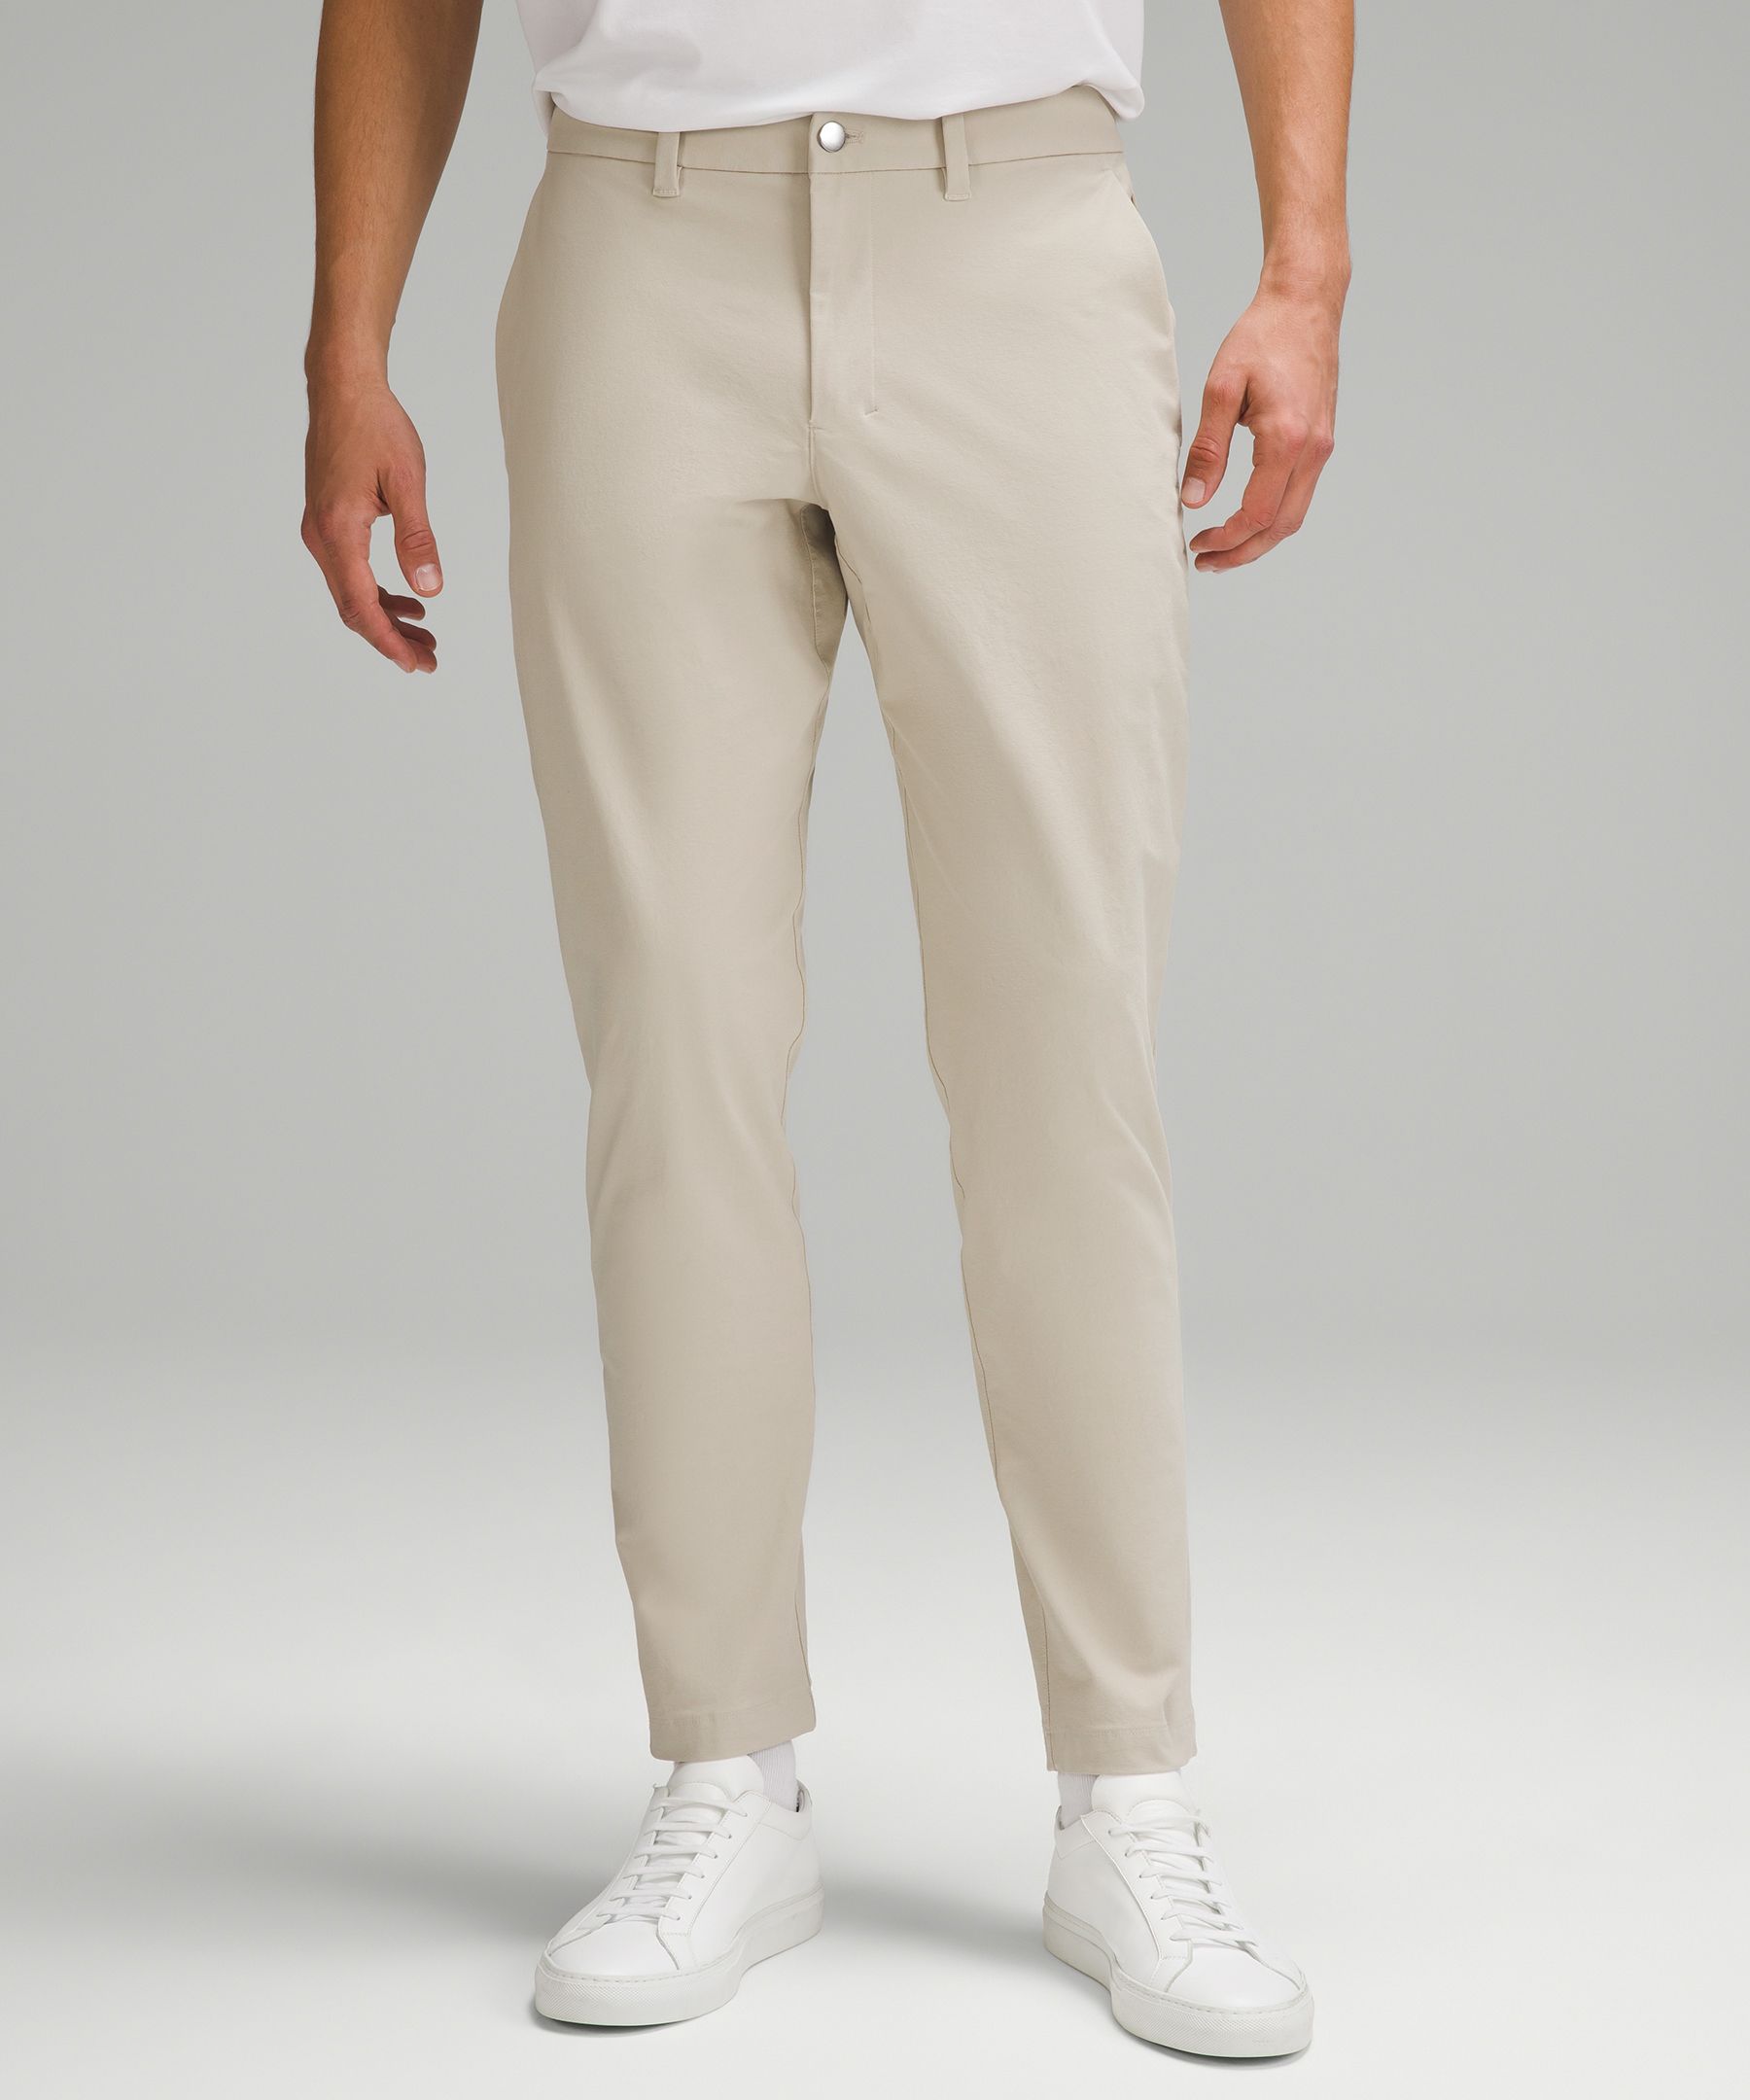 Lululemon Dress Pants Men's Navy New with Tags 44x34 - Locker